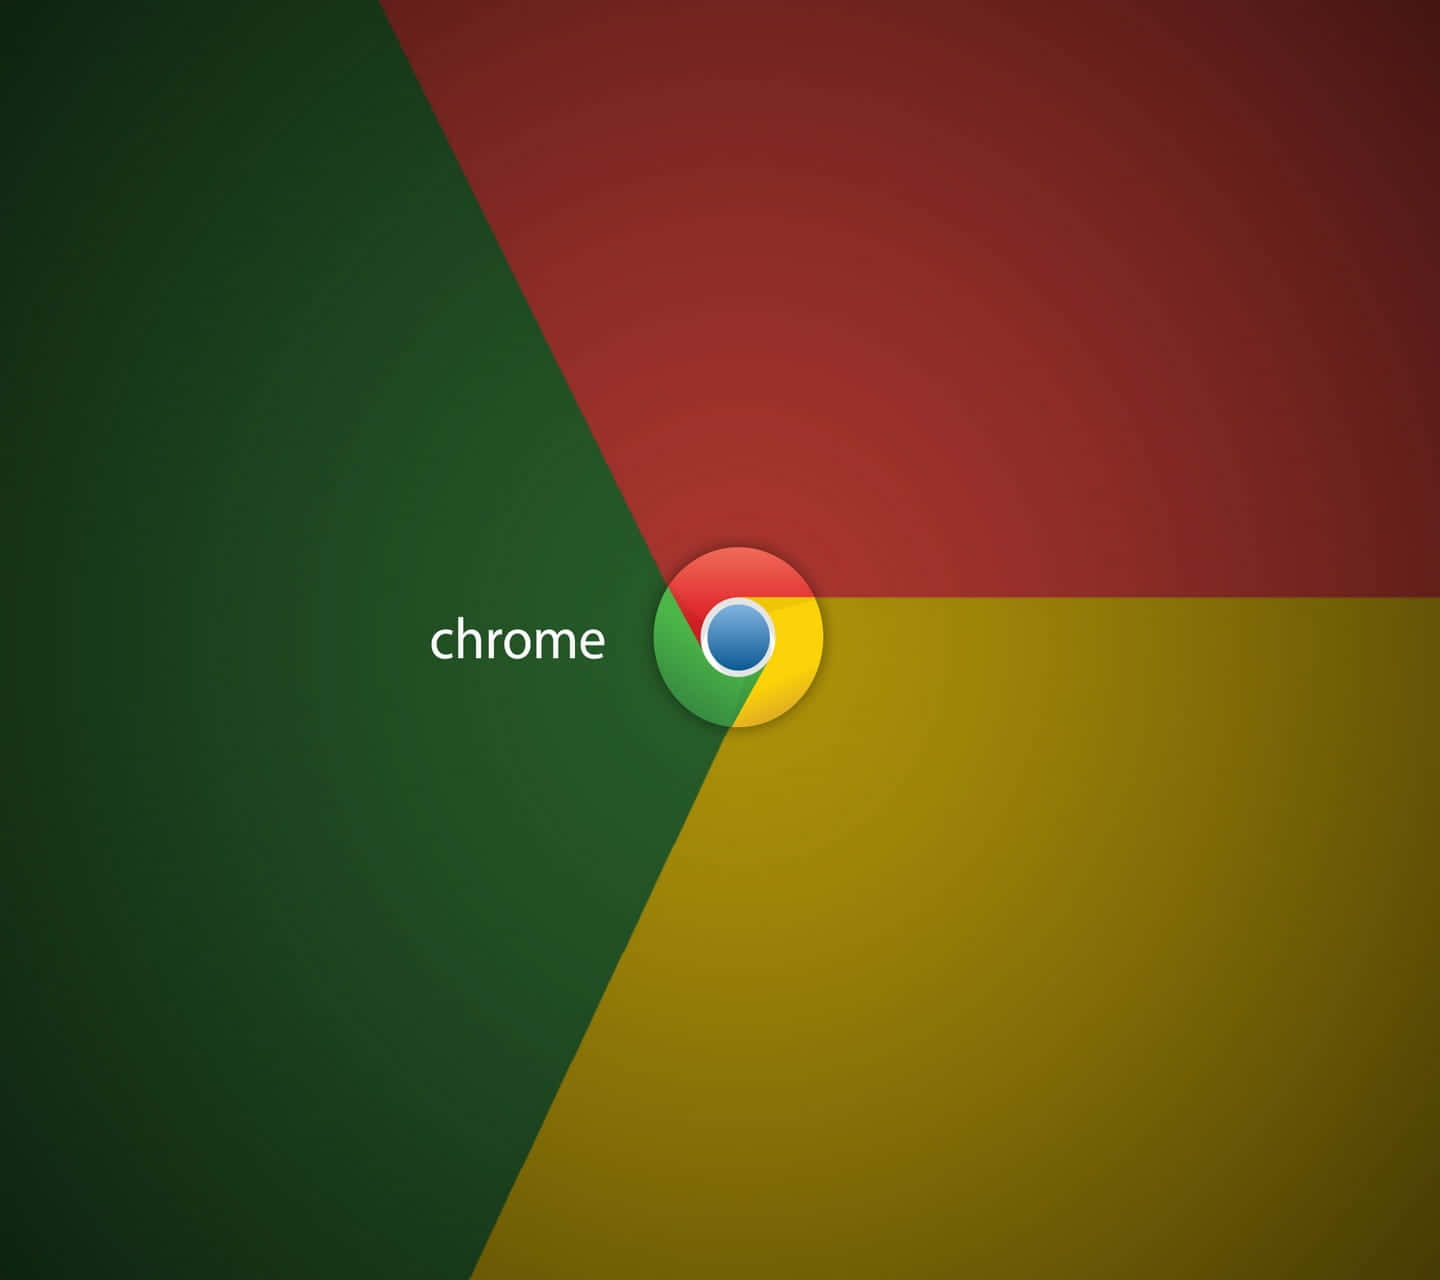 Google Chrome Logo and Name